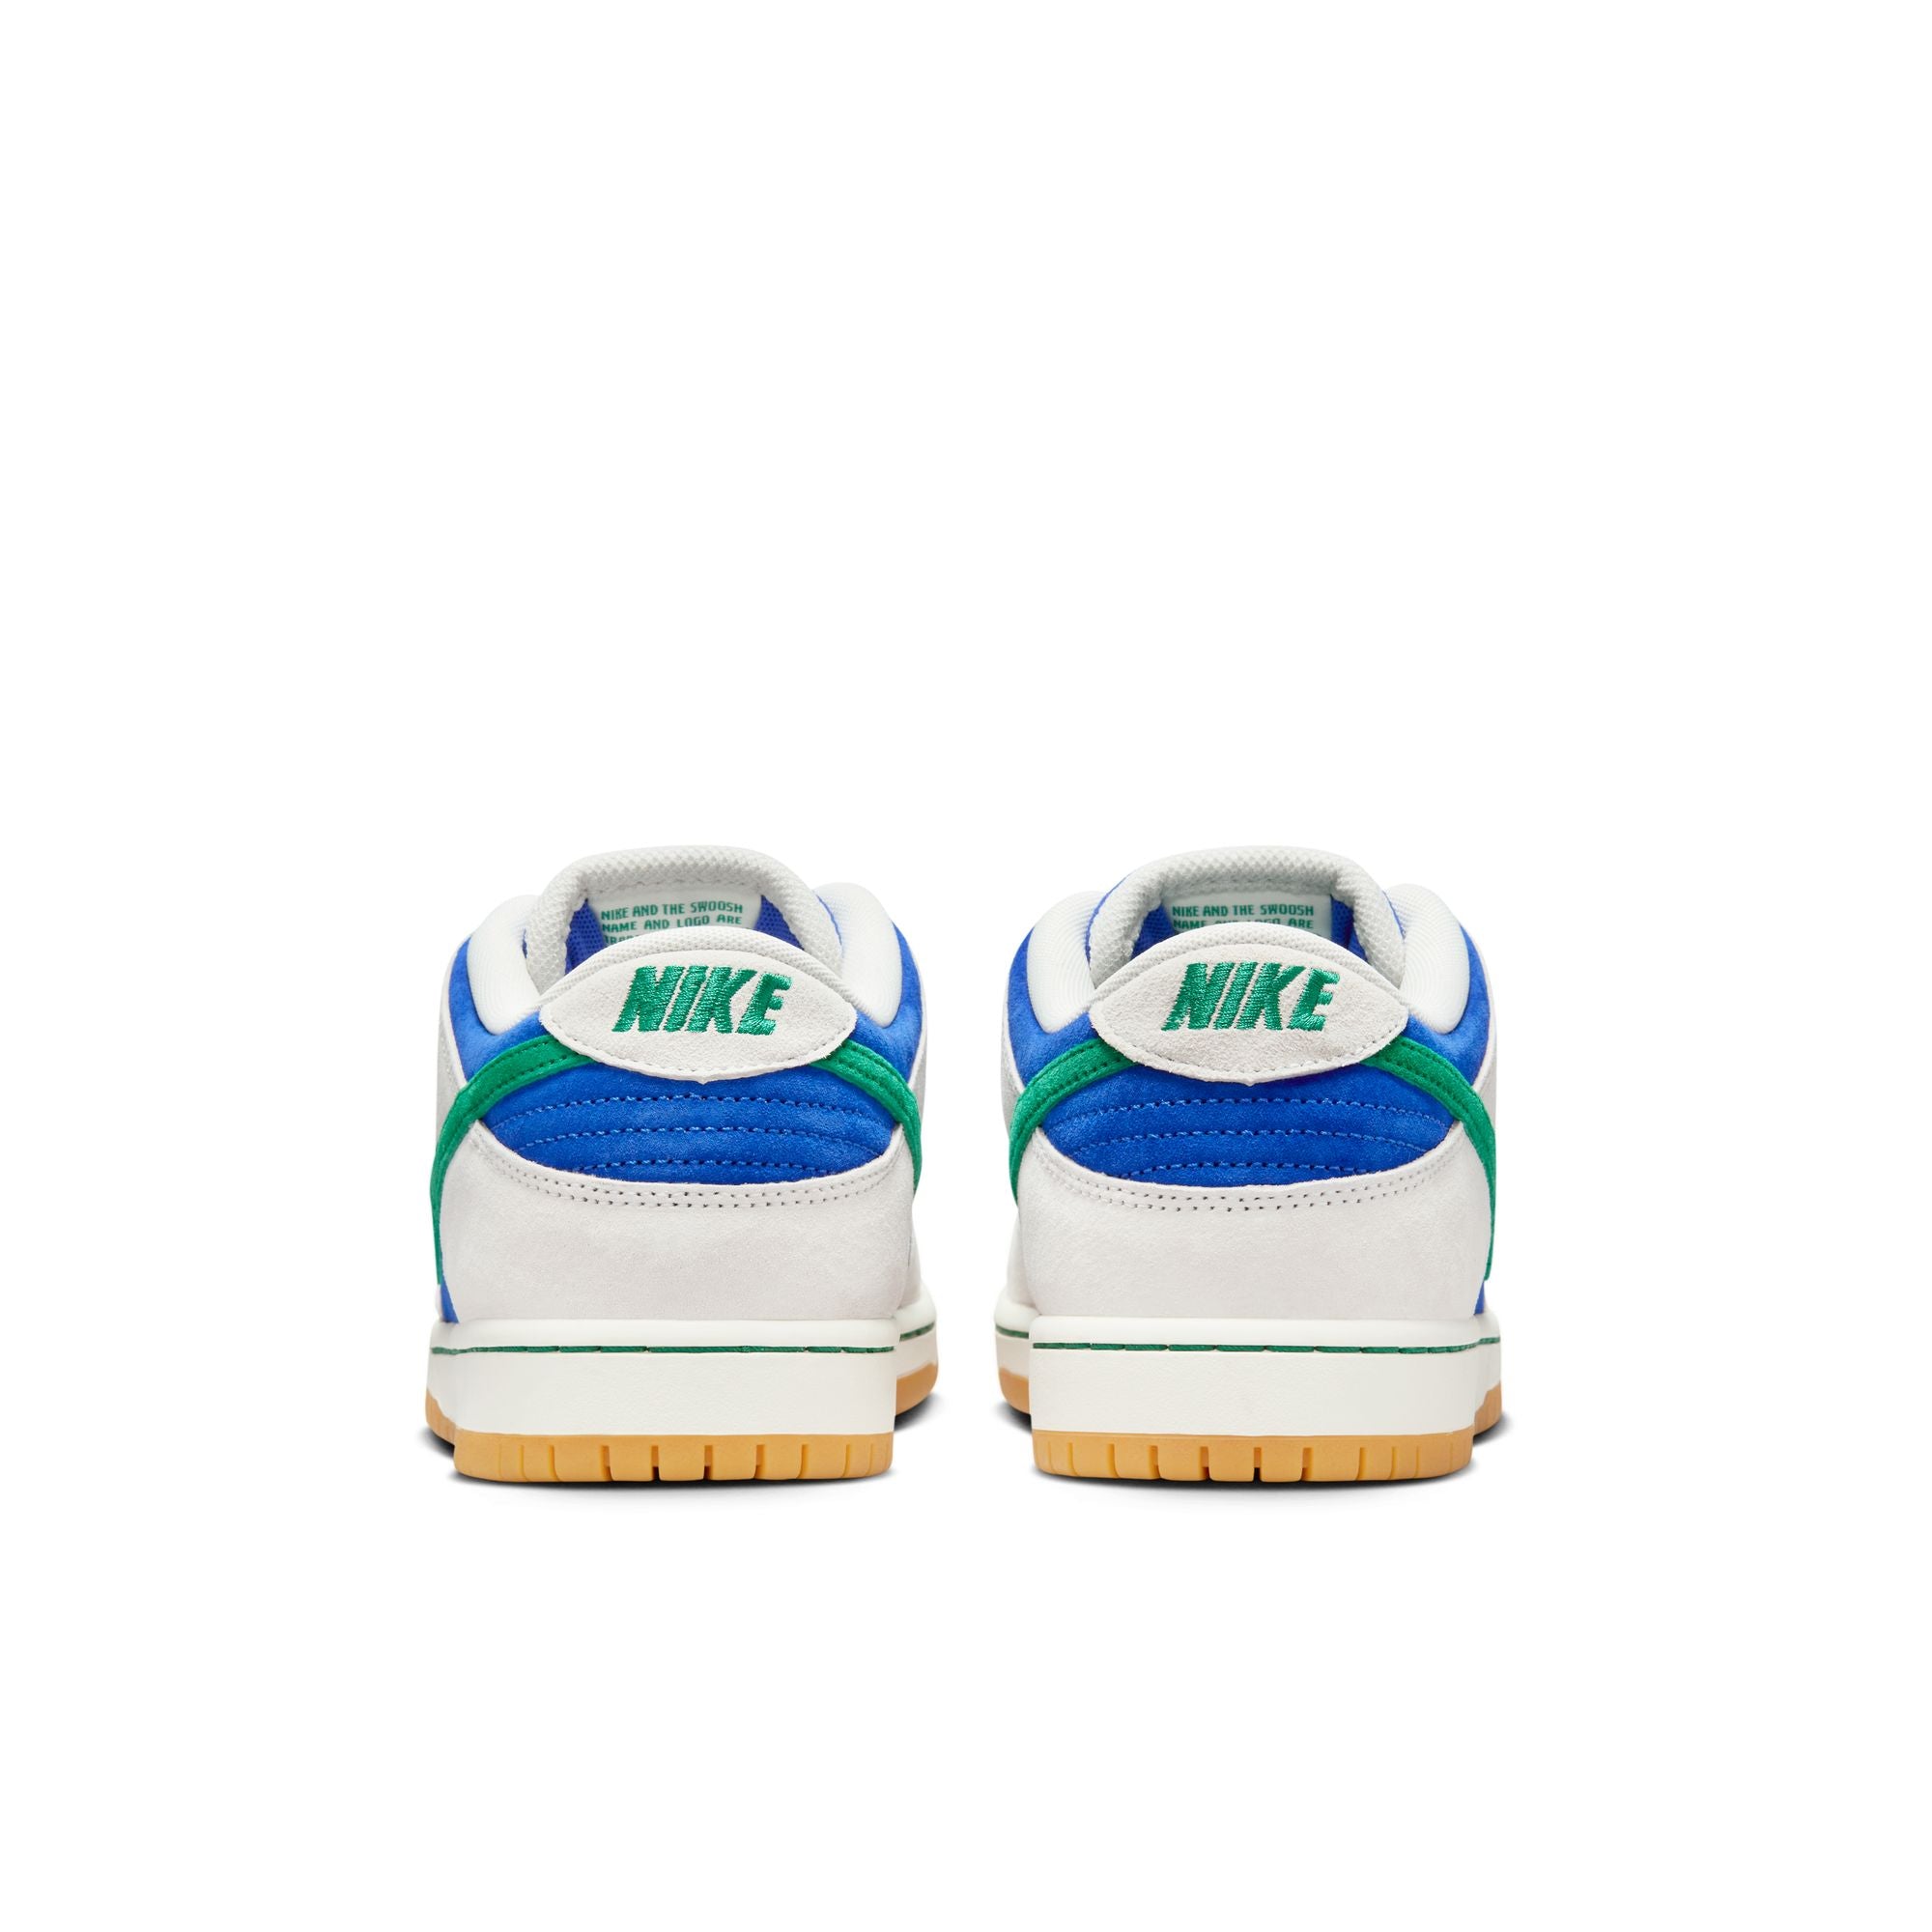 Nike SB Dunk Low Pro Shoes - Reverse Wildcard